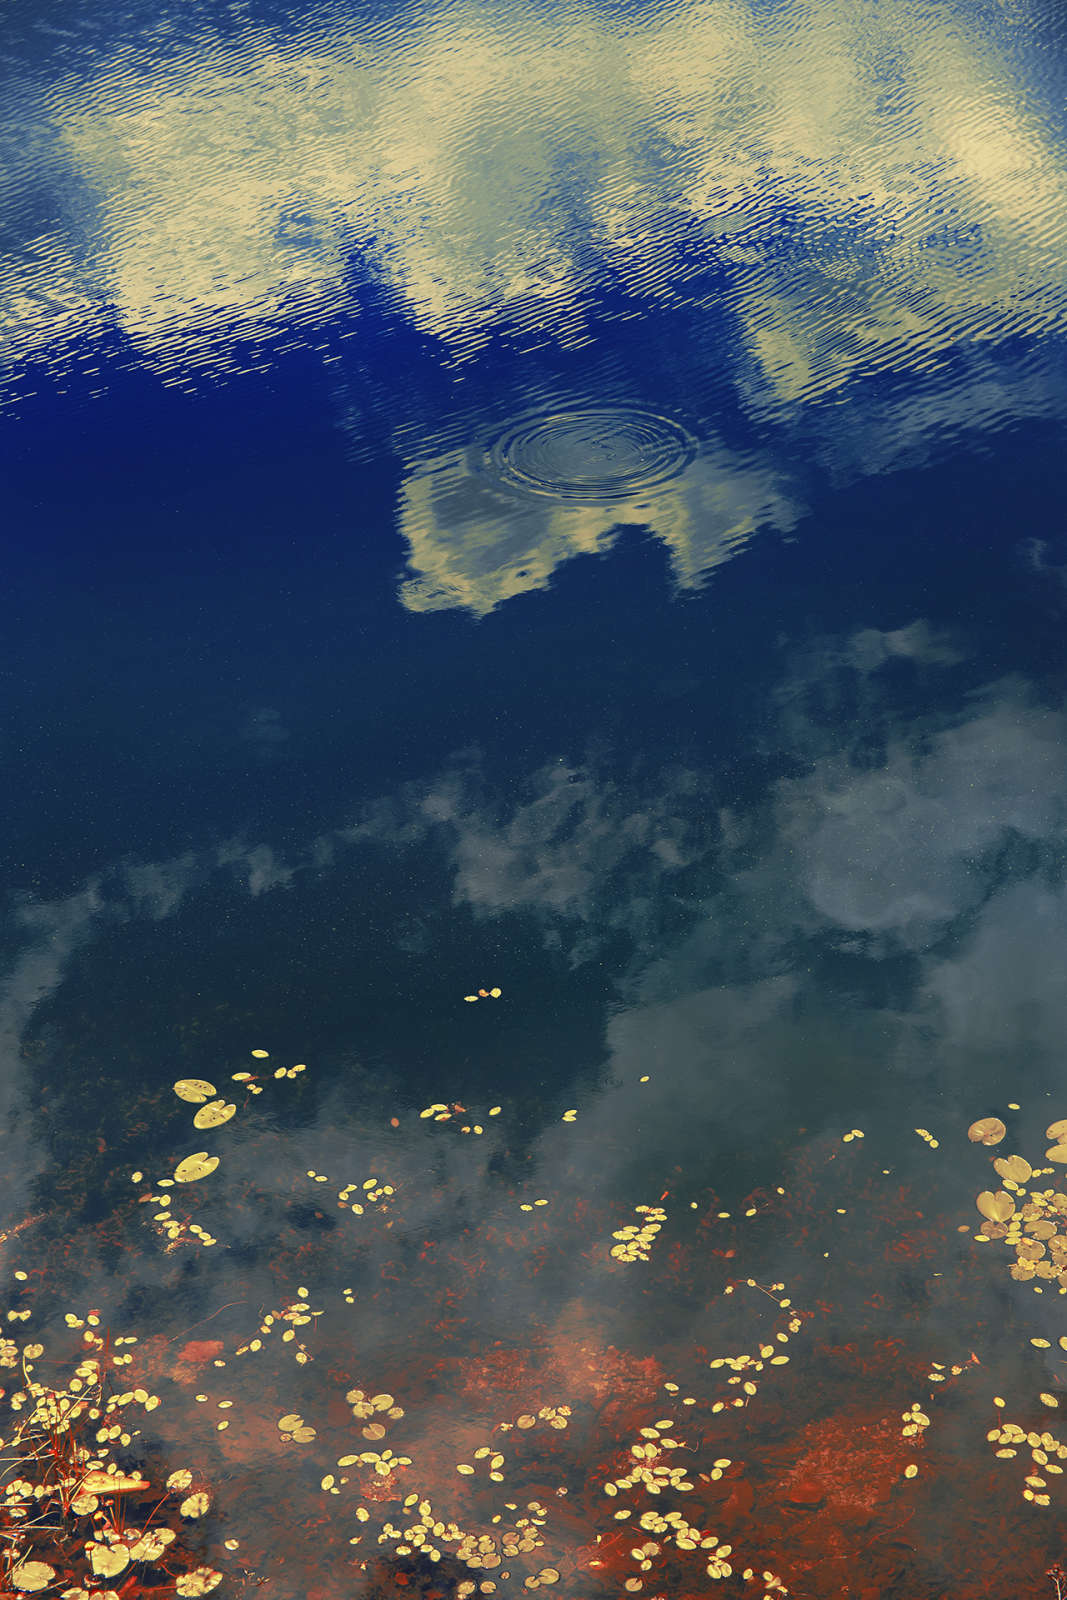 Erik Madigan Heck, Clouds in Pond, The Garden, 2019